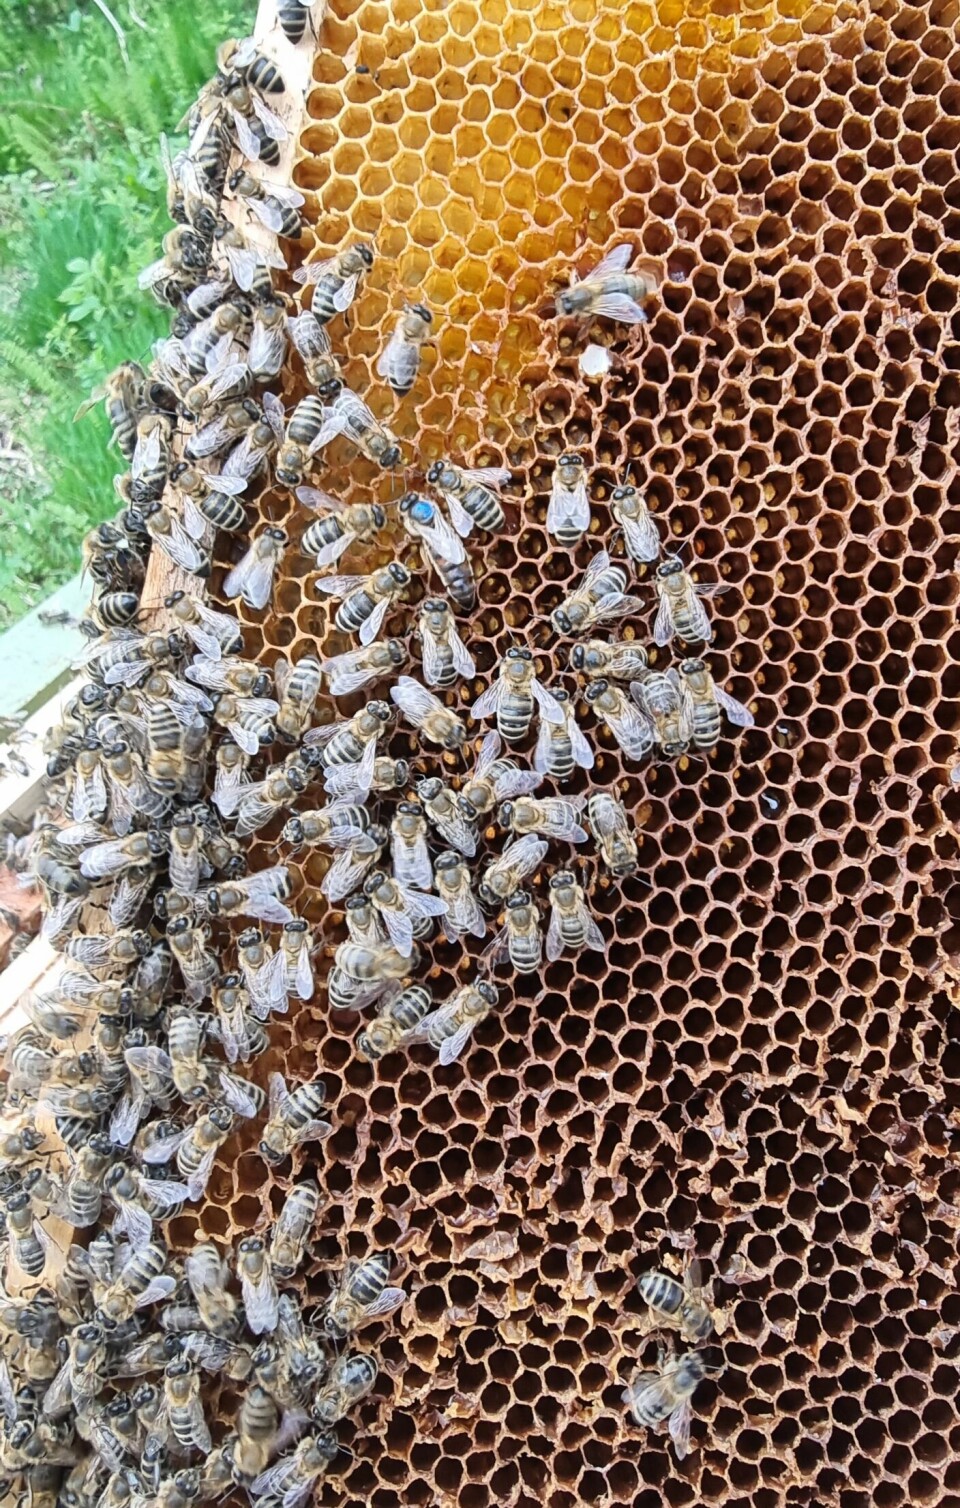 En tavle med bier og dronningen